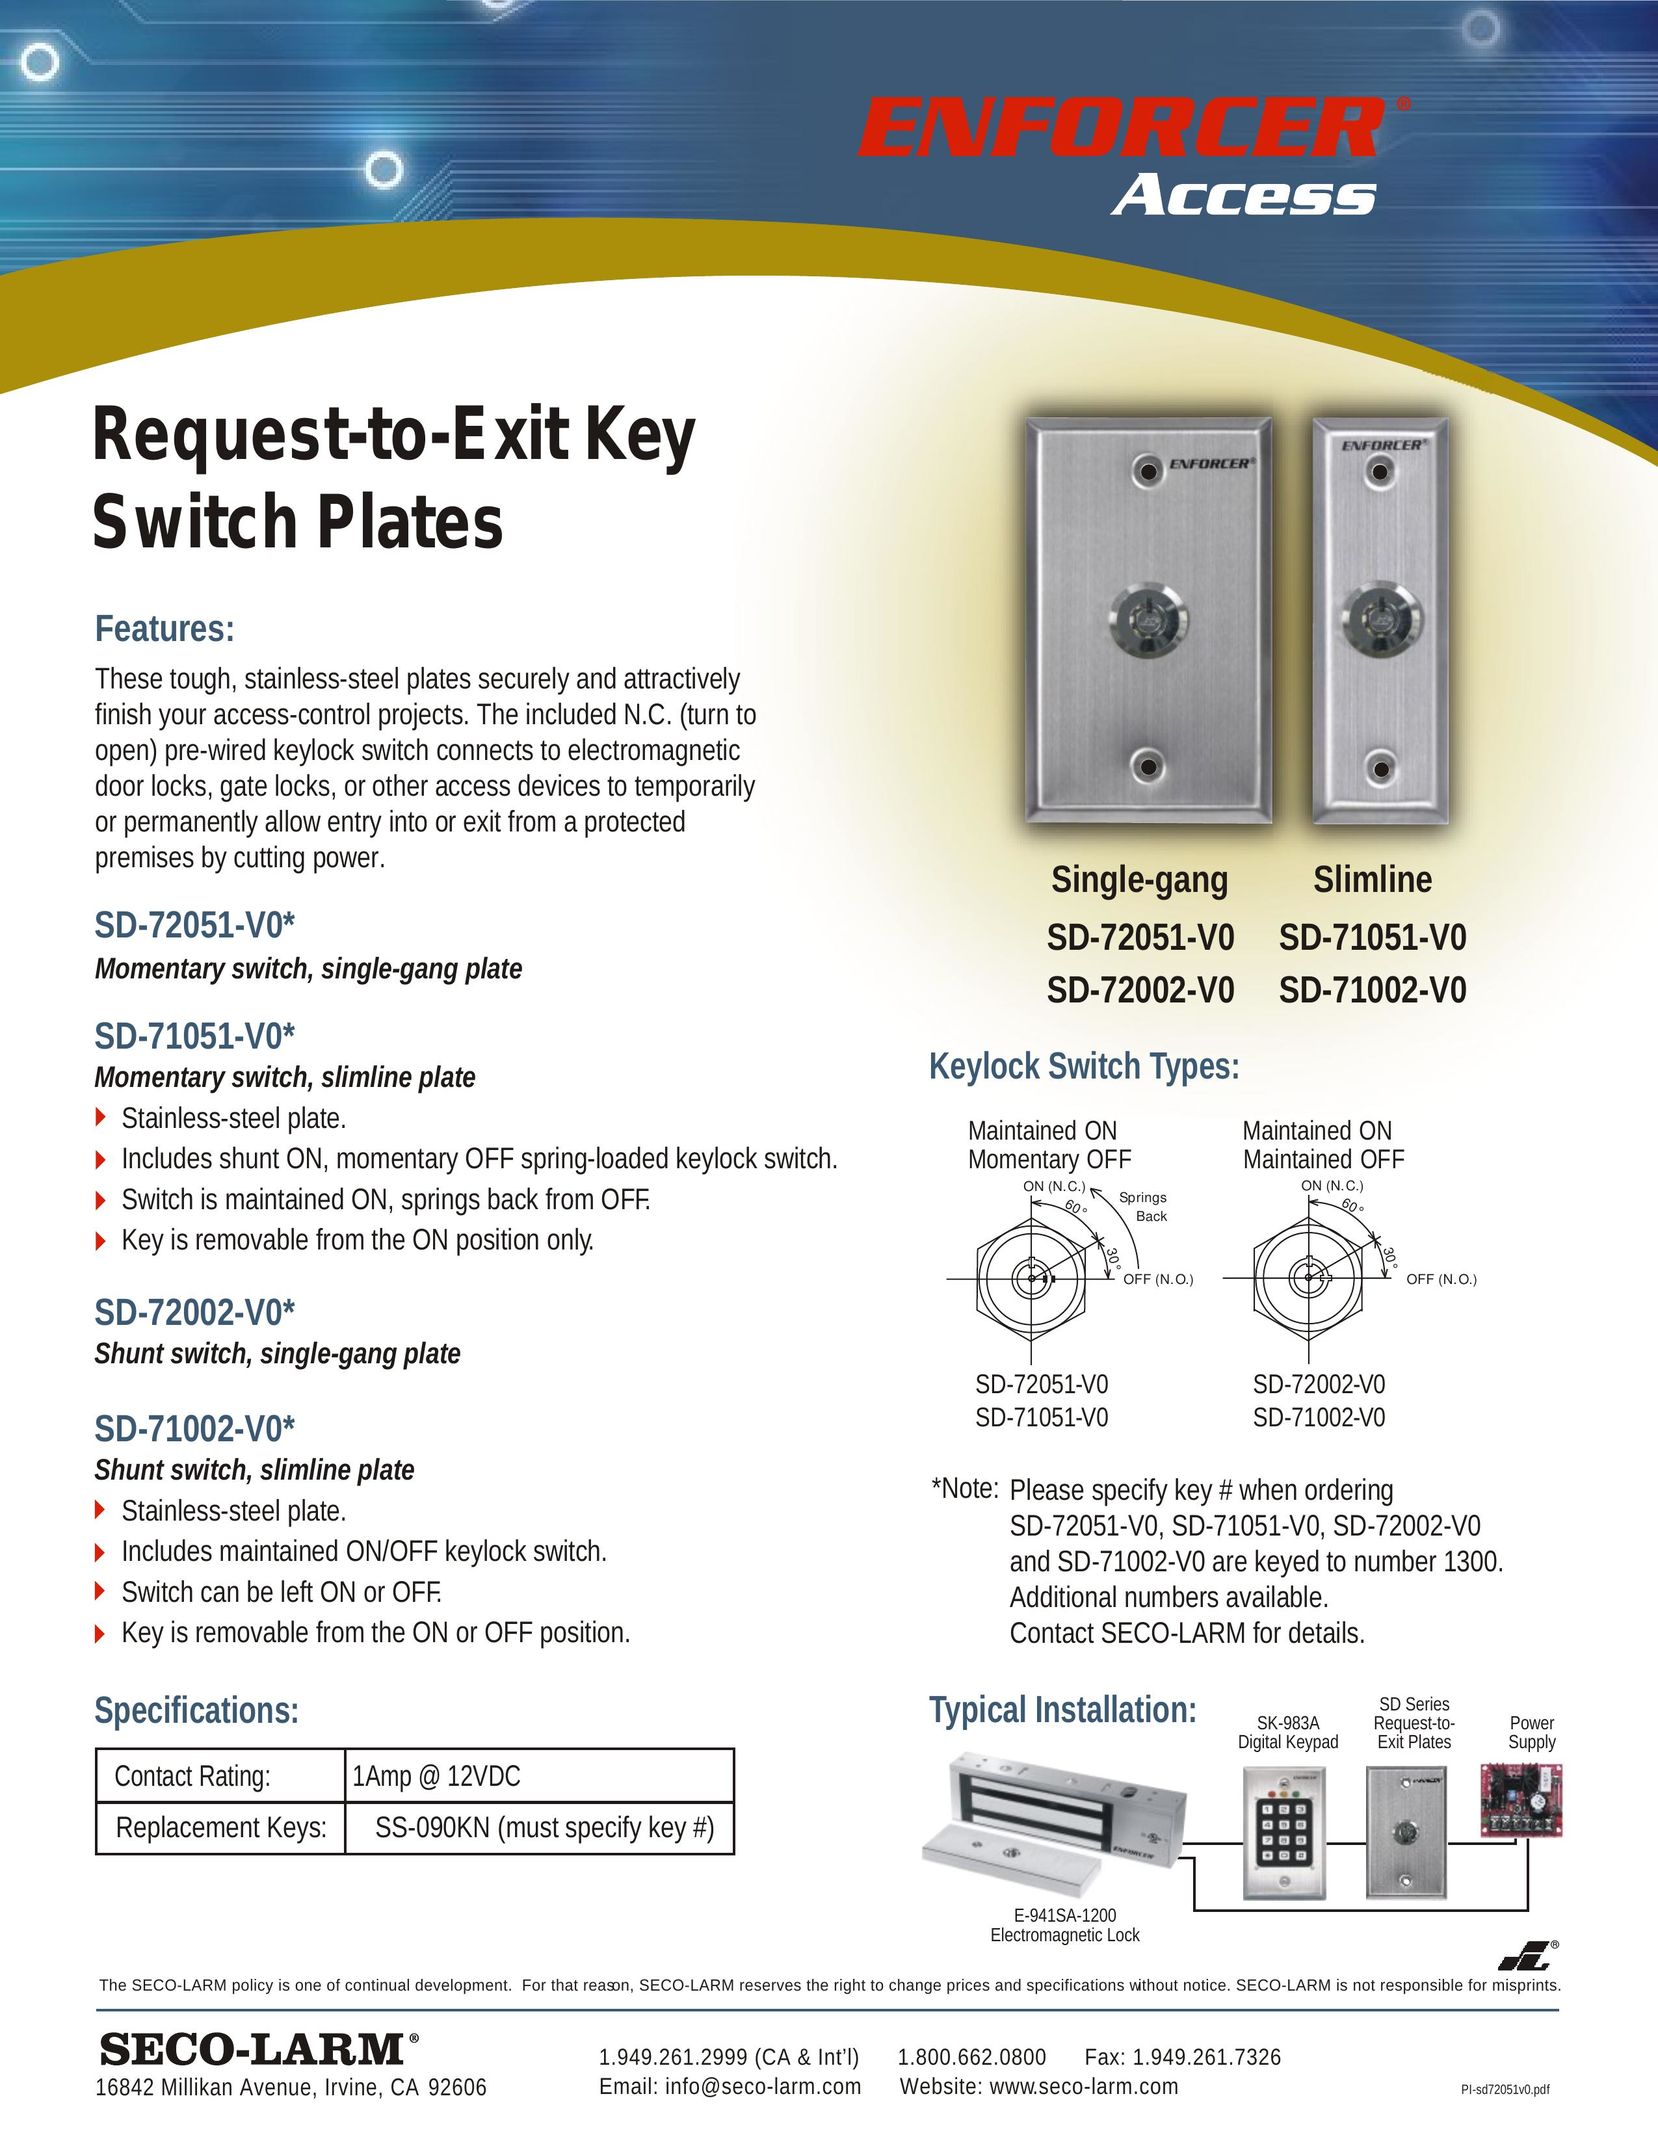 SECO-LARM USA SD-71002-V0 Door User Manual